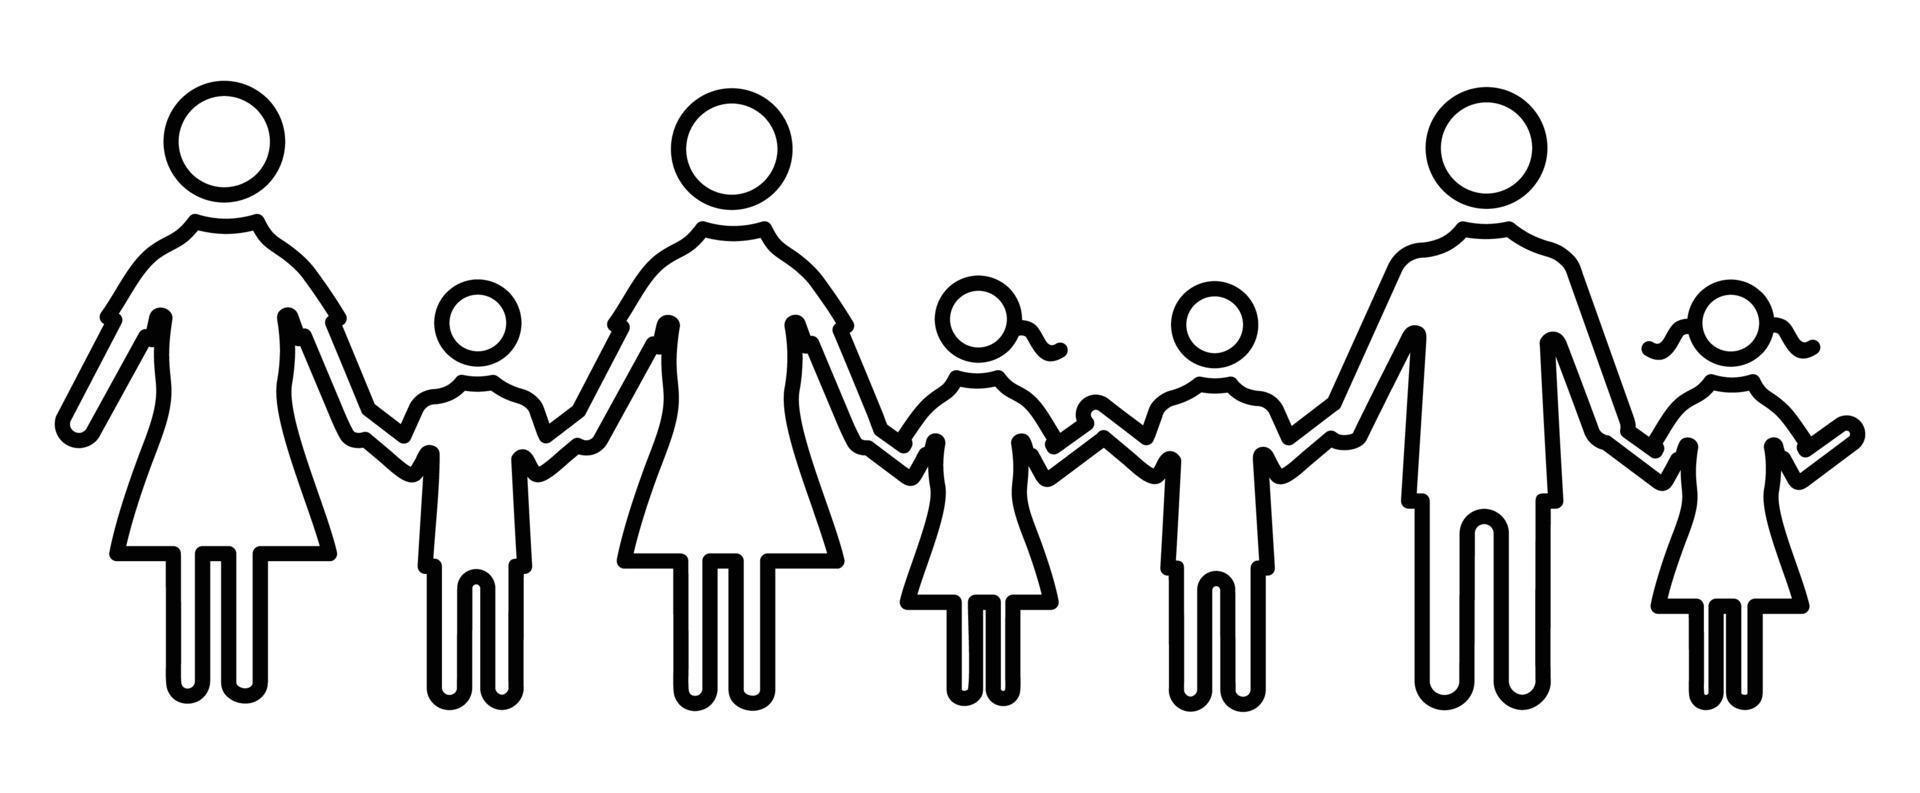 pictogrammenset familie. vrouw, man, partner, kinderen, zoon, dochter. platte familie icon set. vector